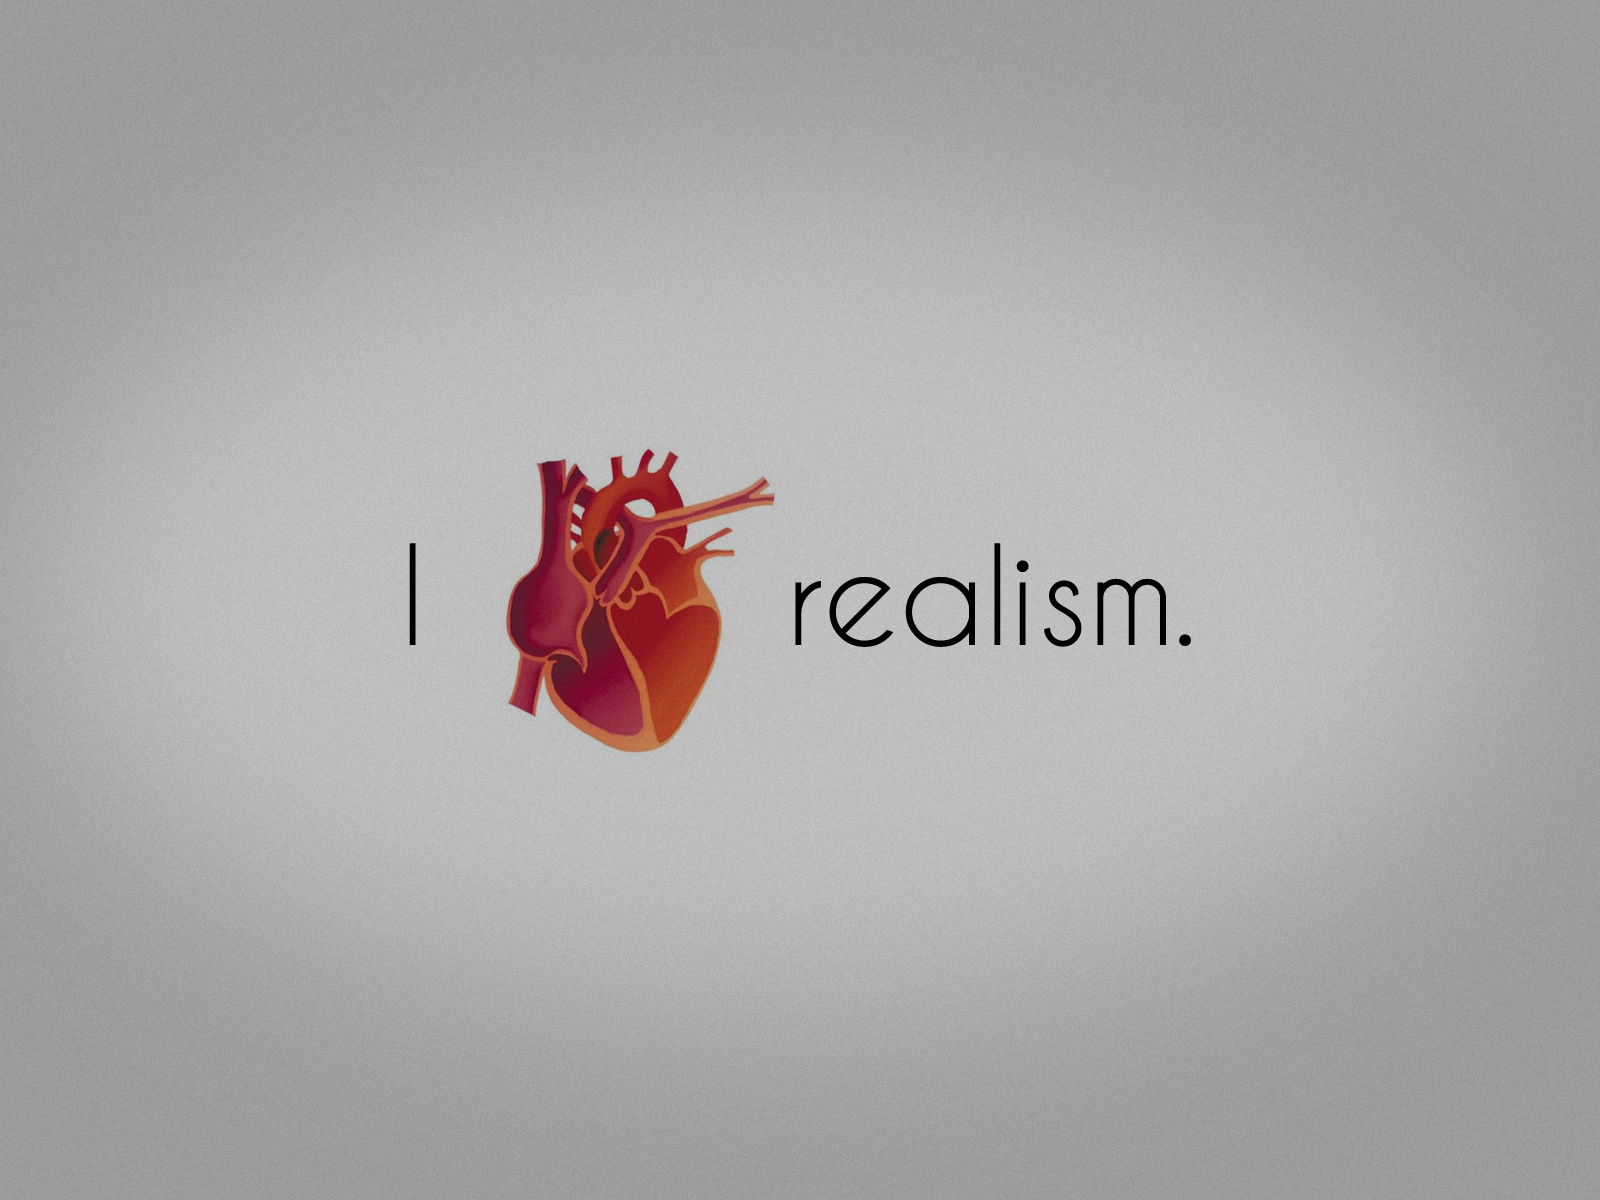 , realism, love, I